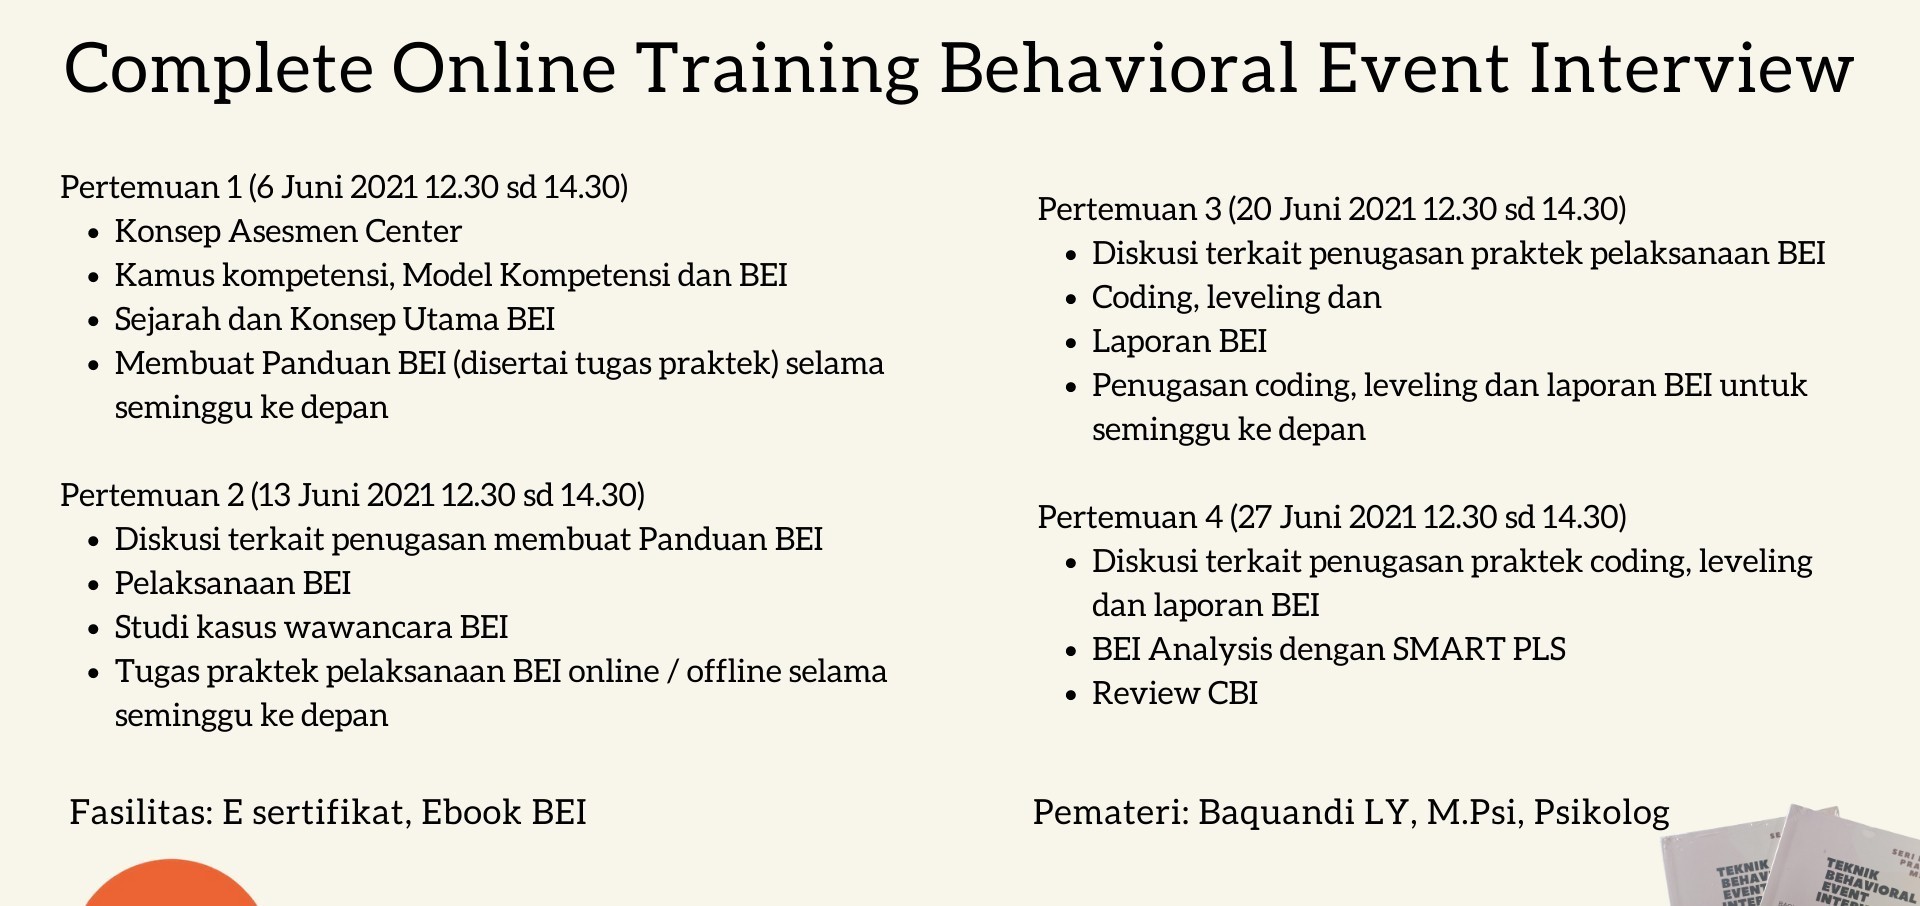 Complete Behavioral Event Interview Online Training